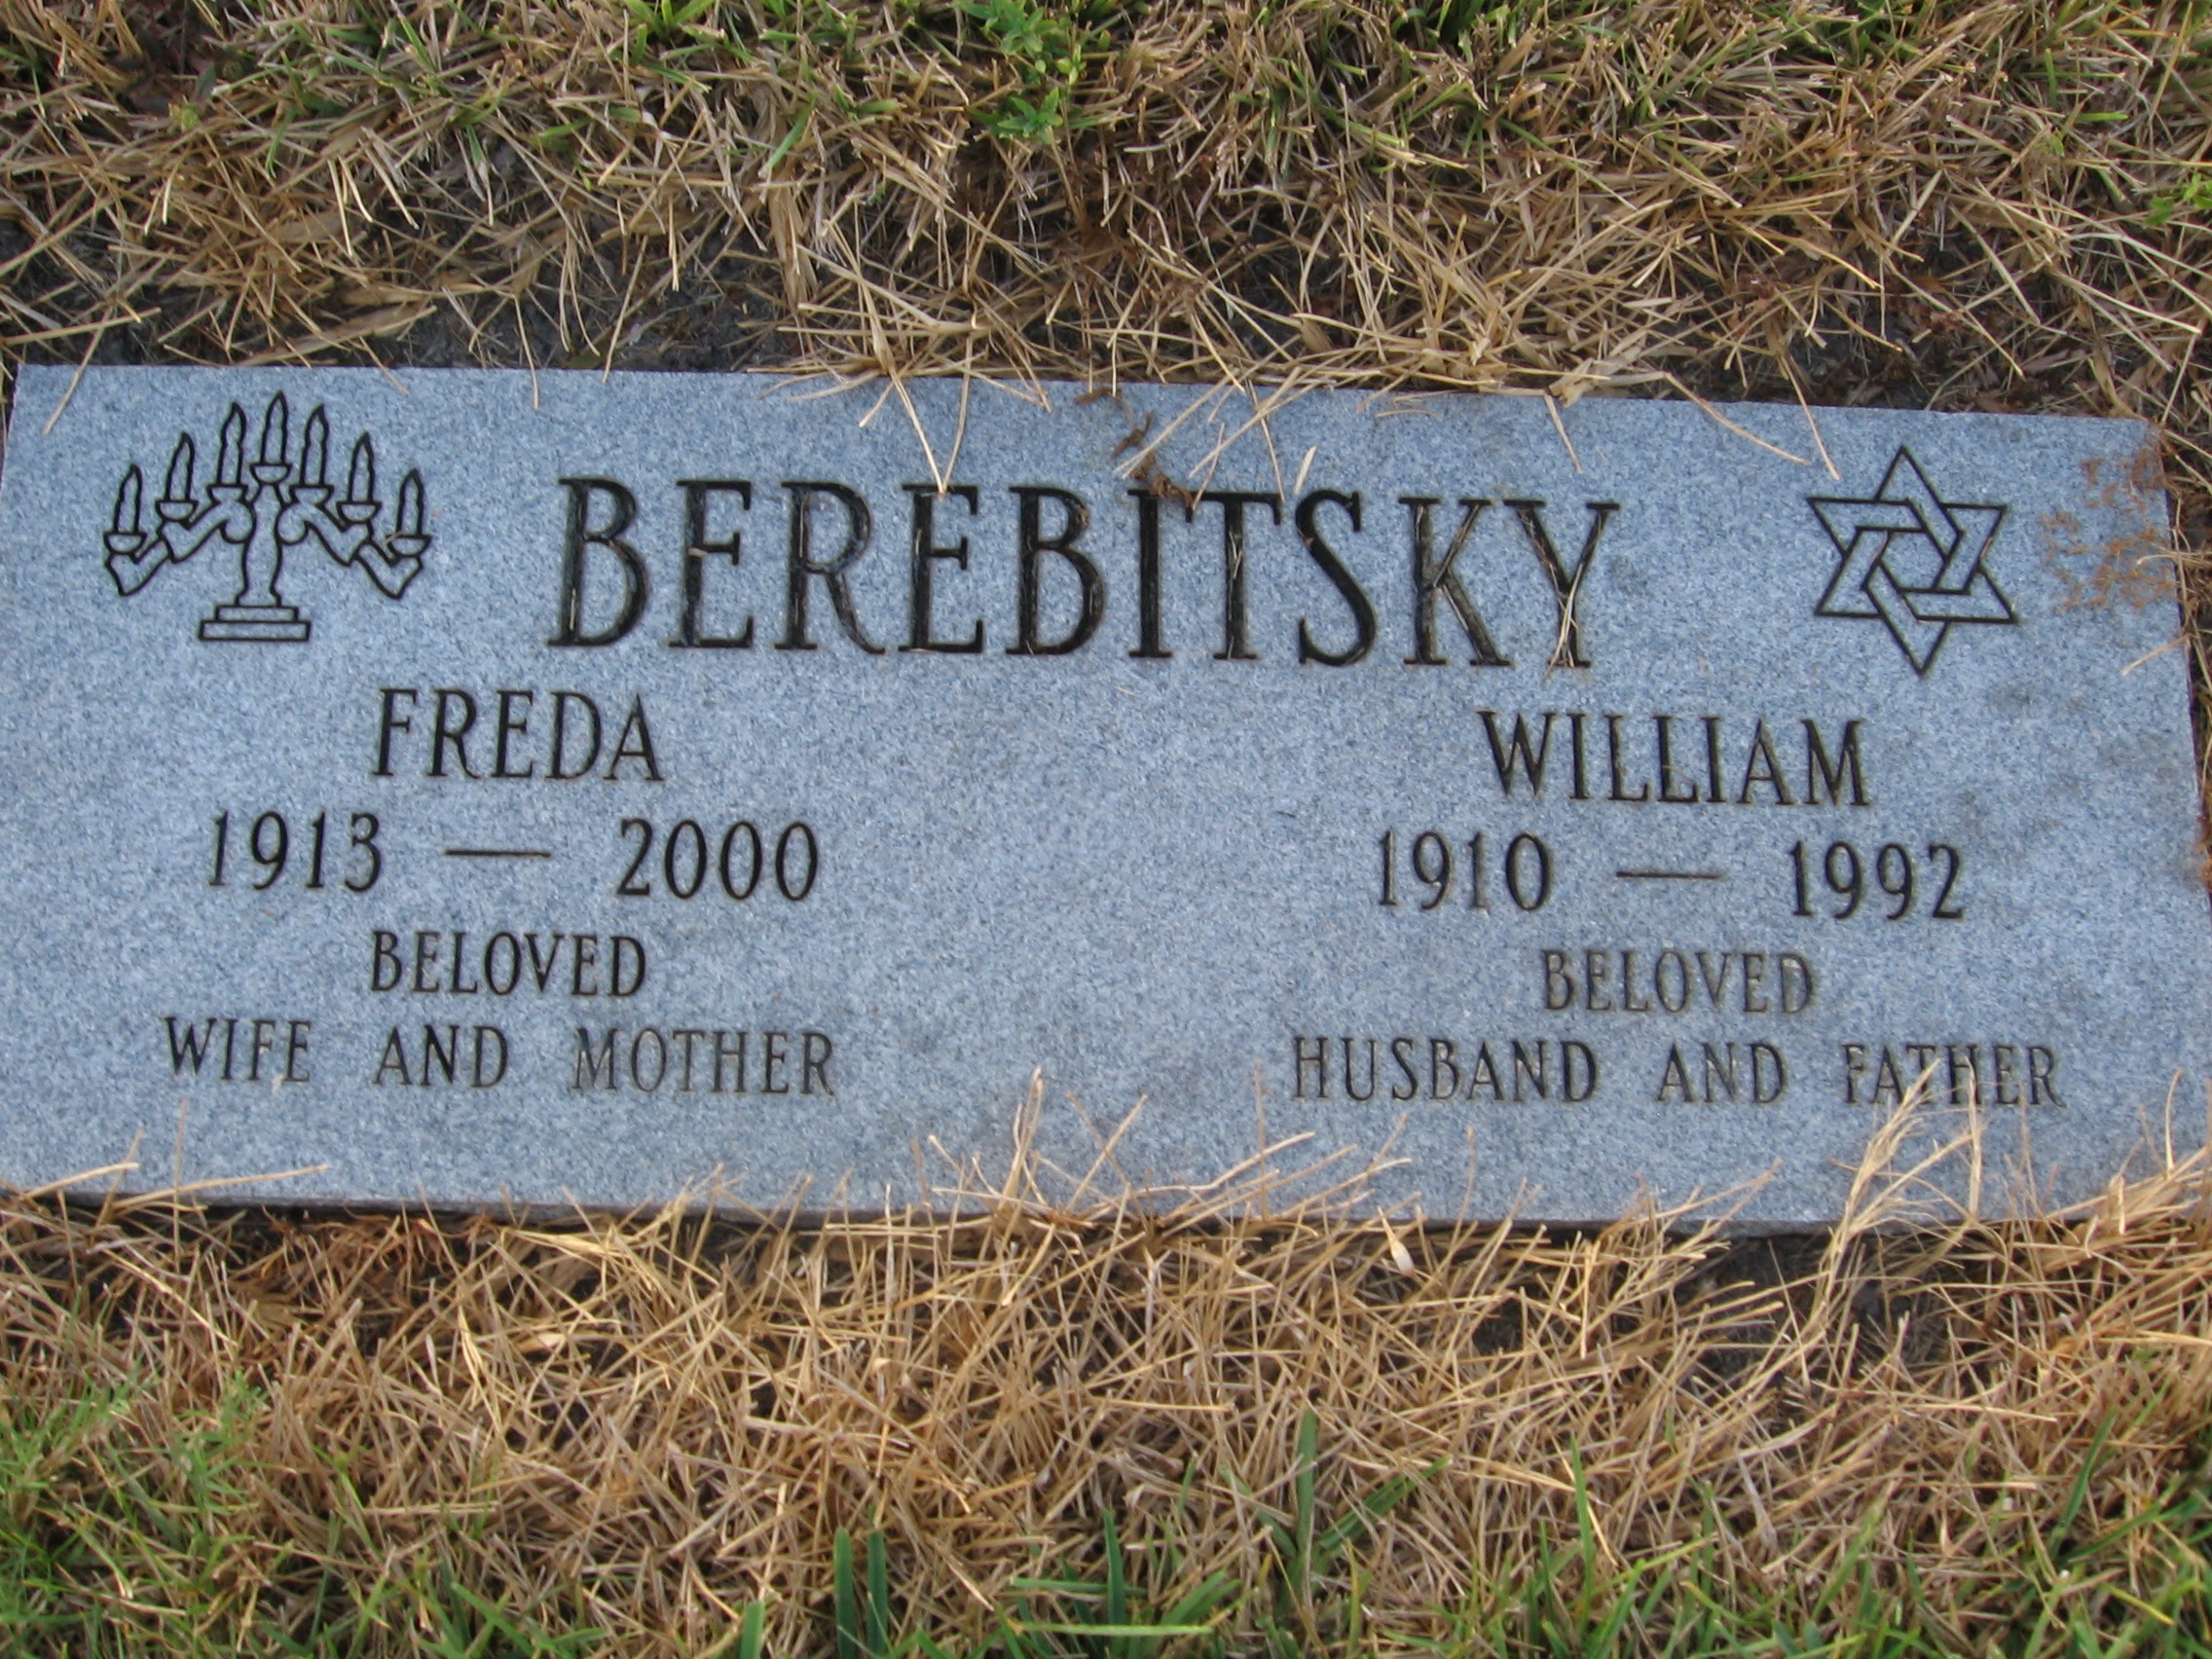 William Berebitsky